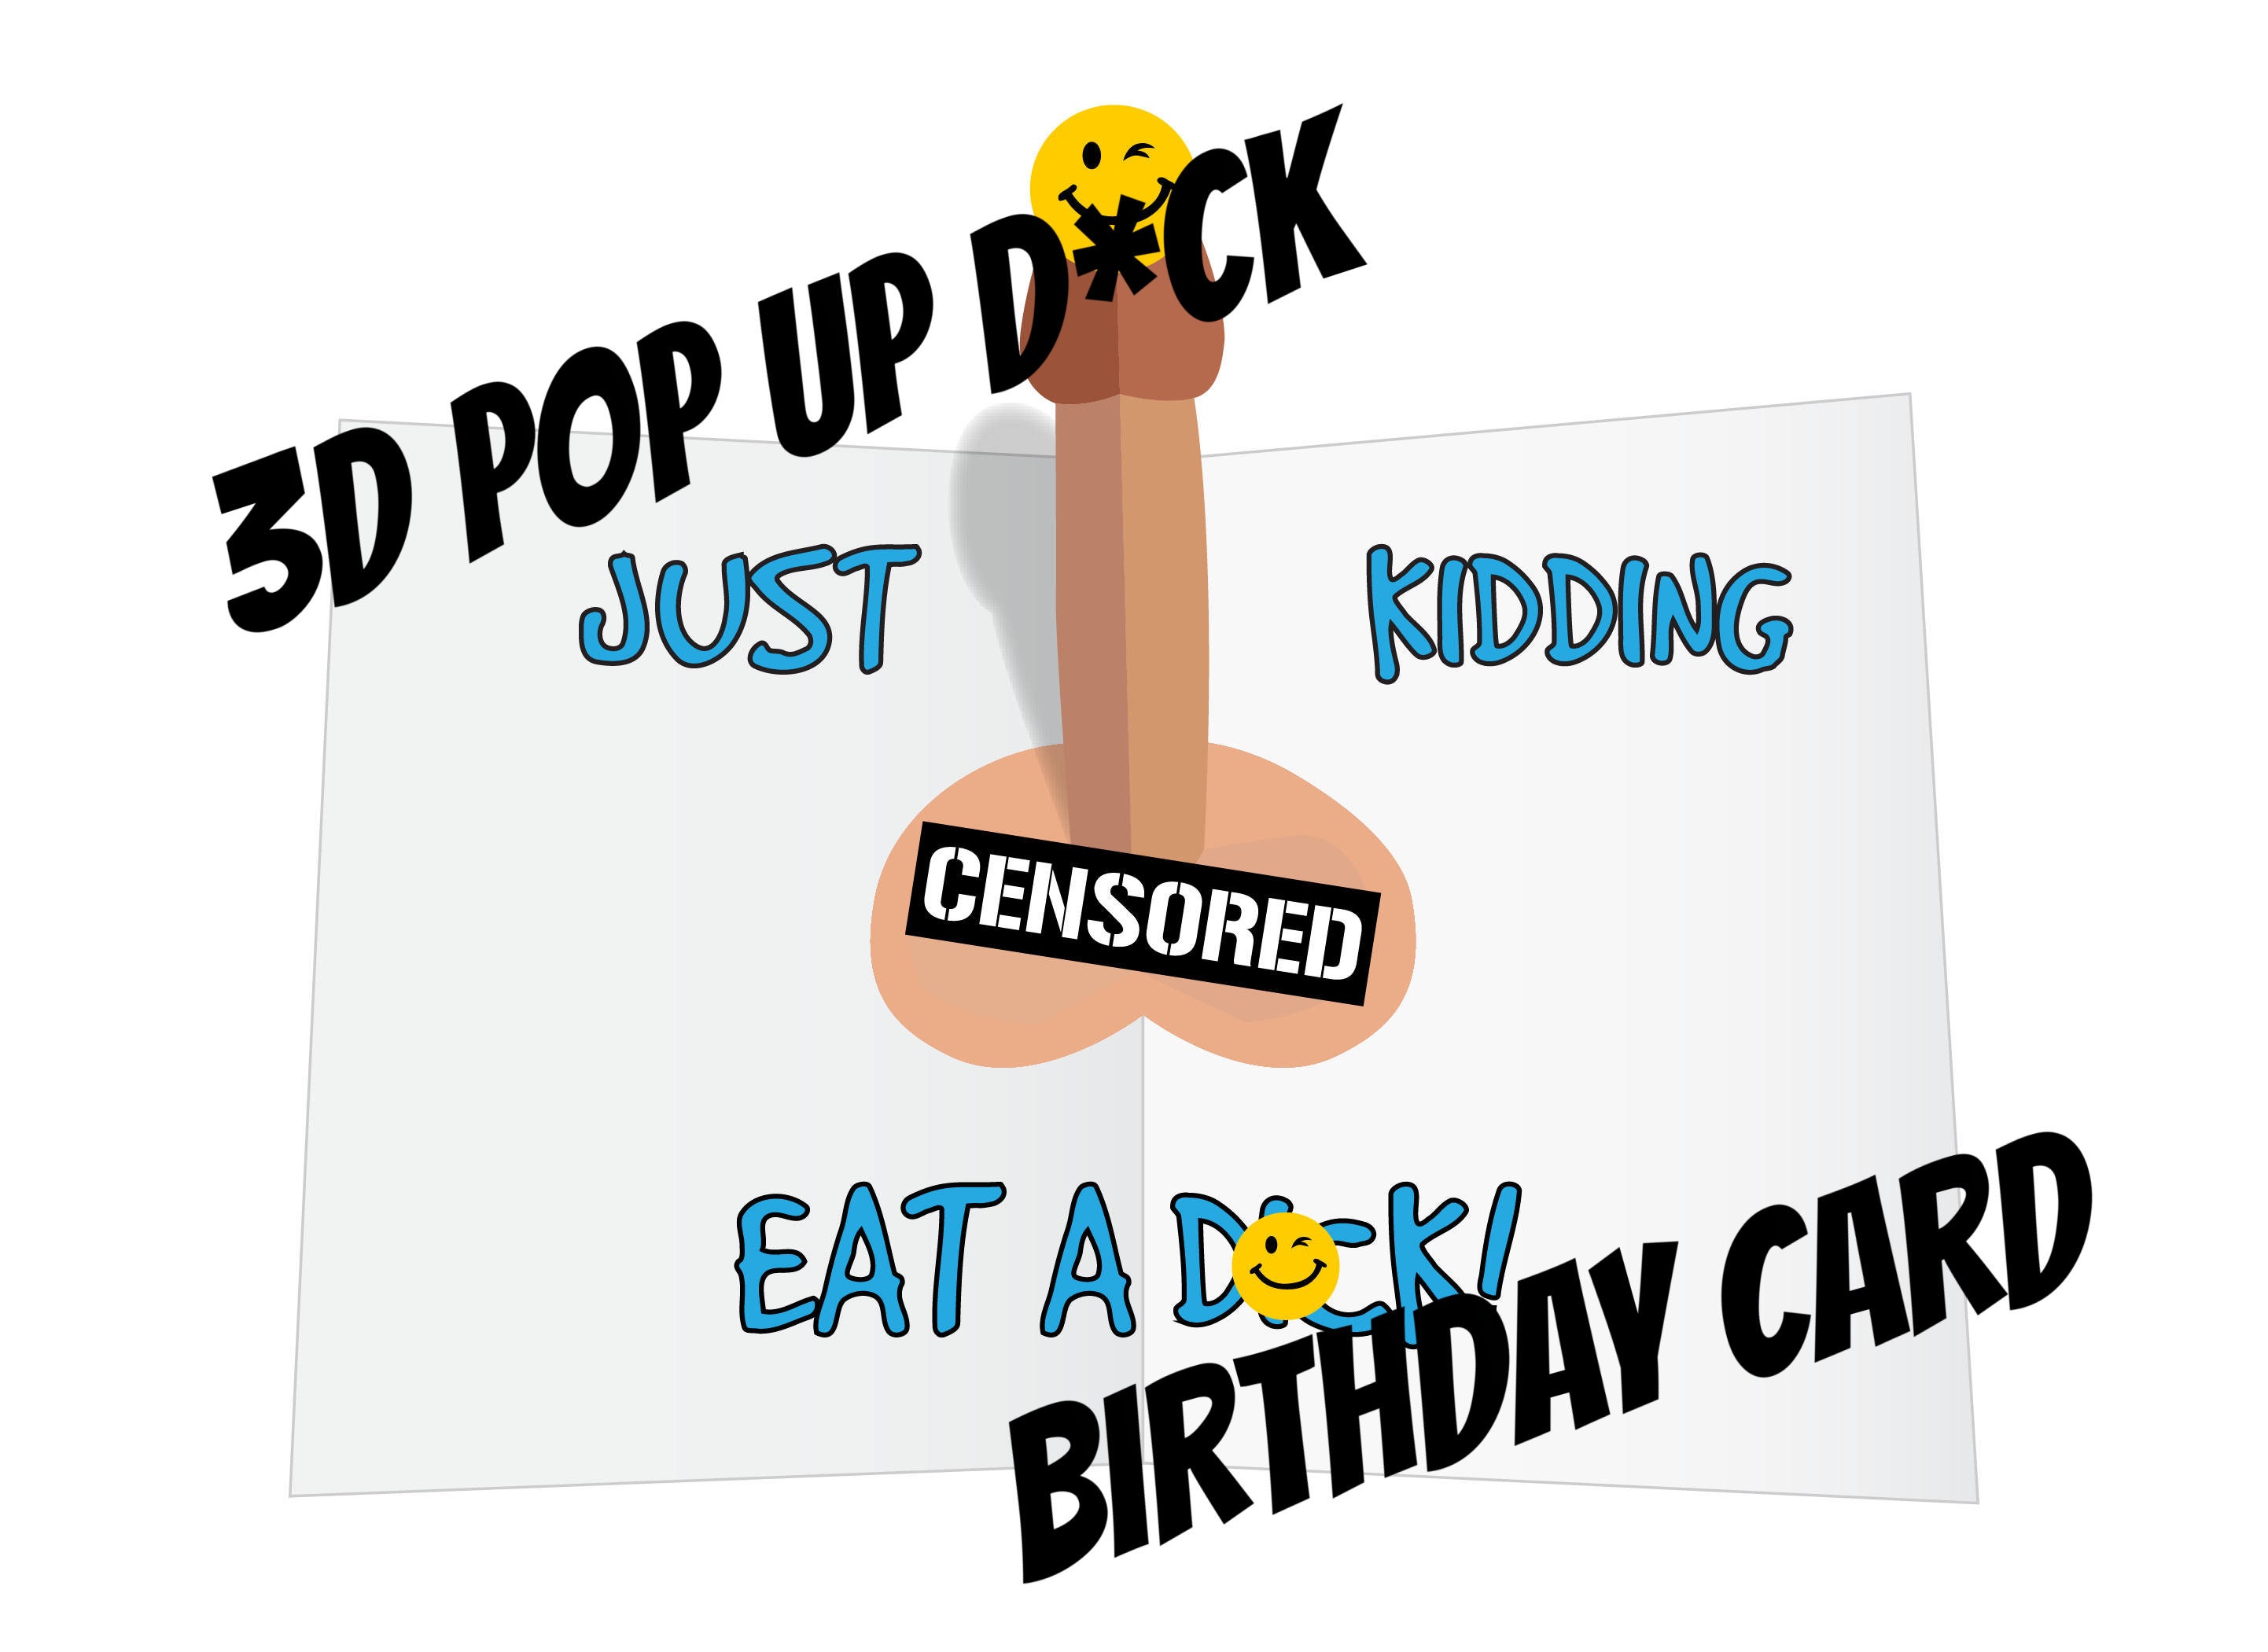 Dick Popup Card